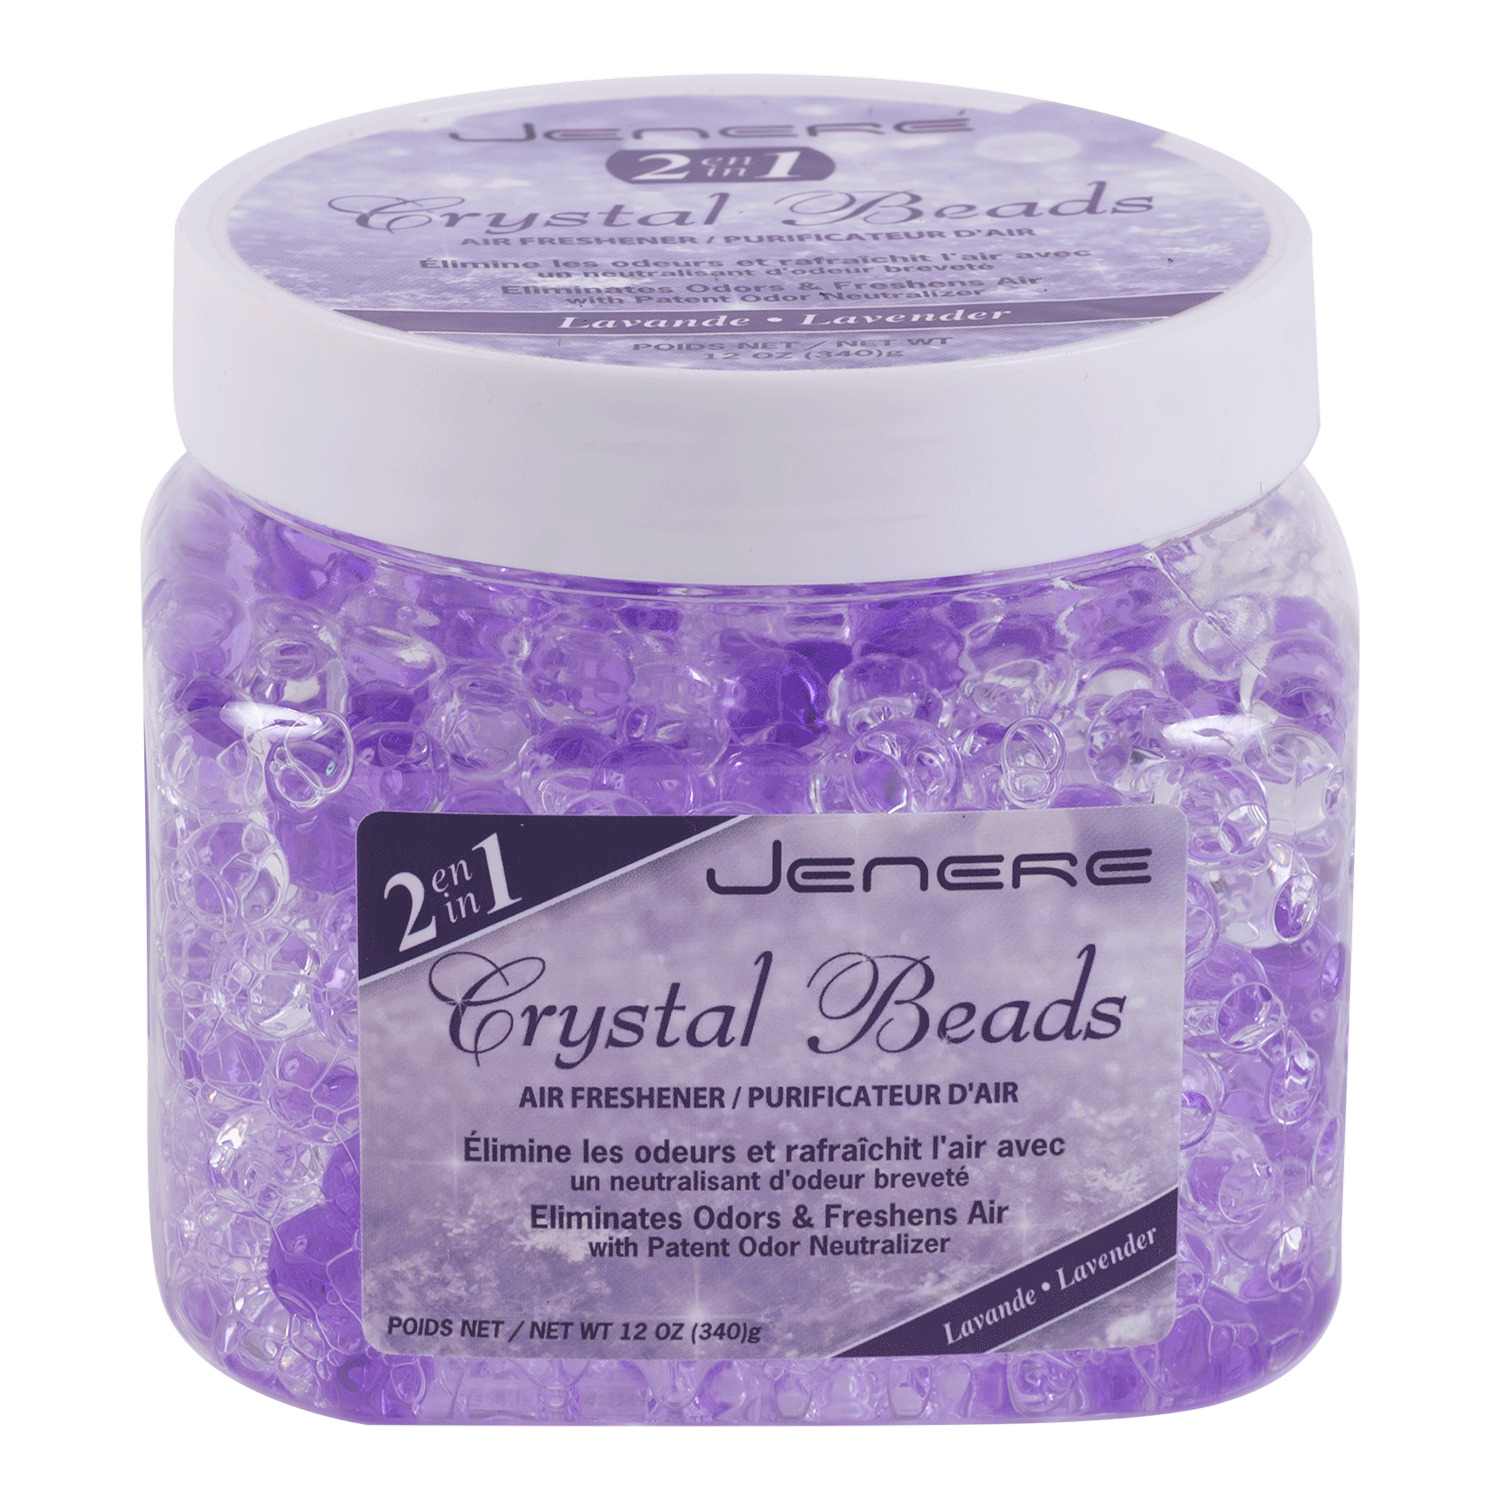 Crystal Beads 2-in-1 air freshener - Lavender